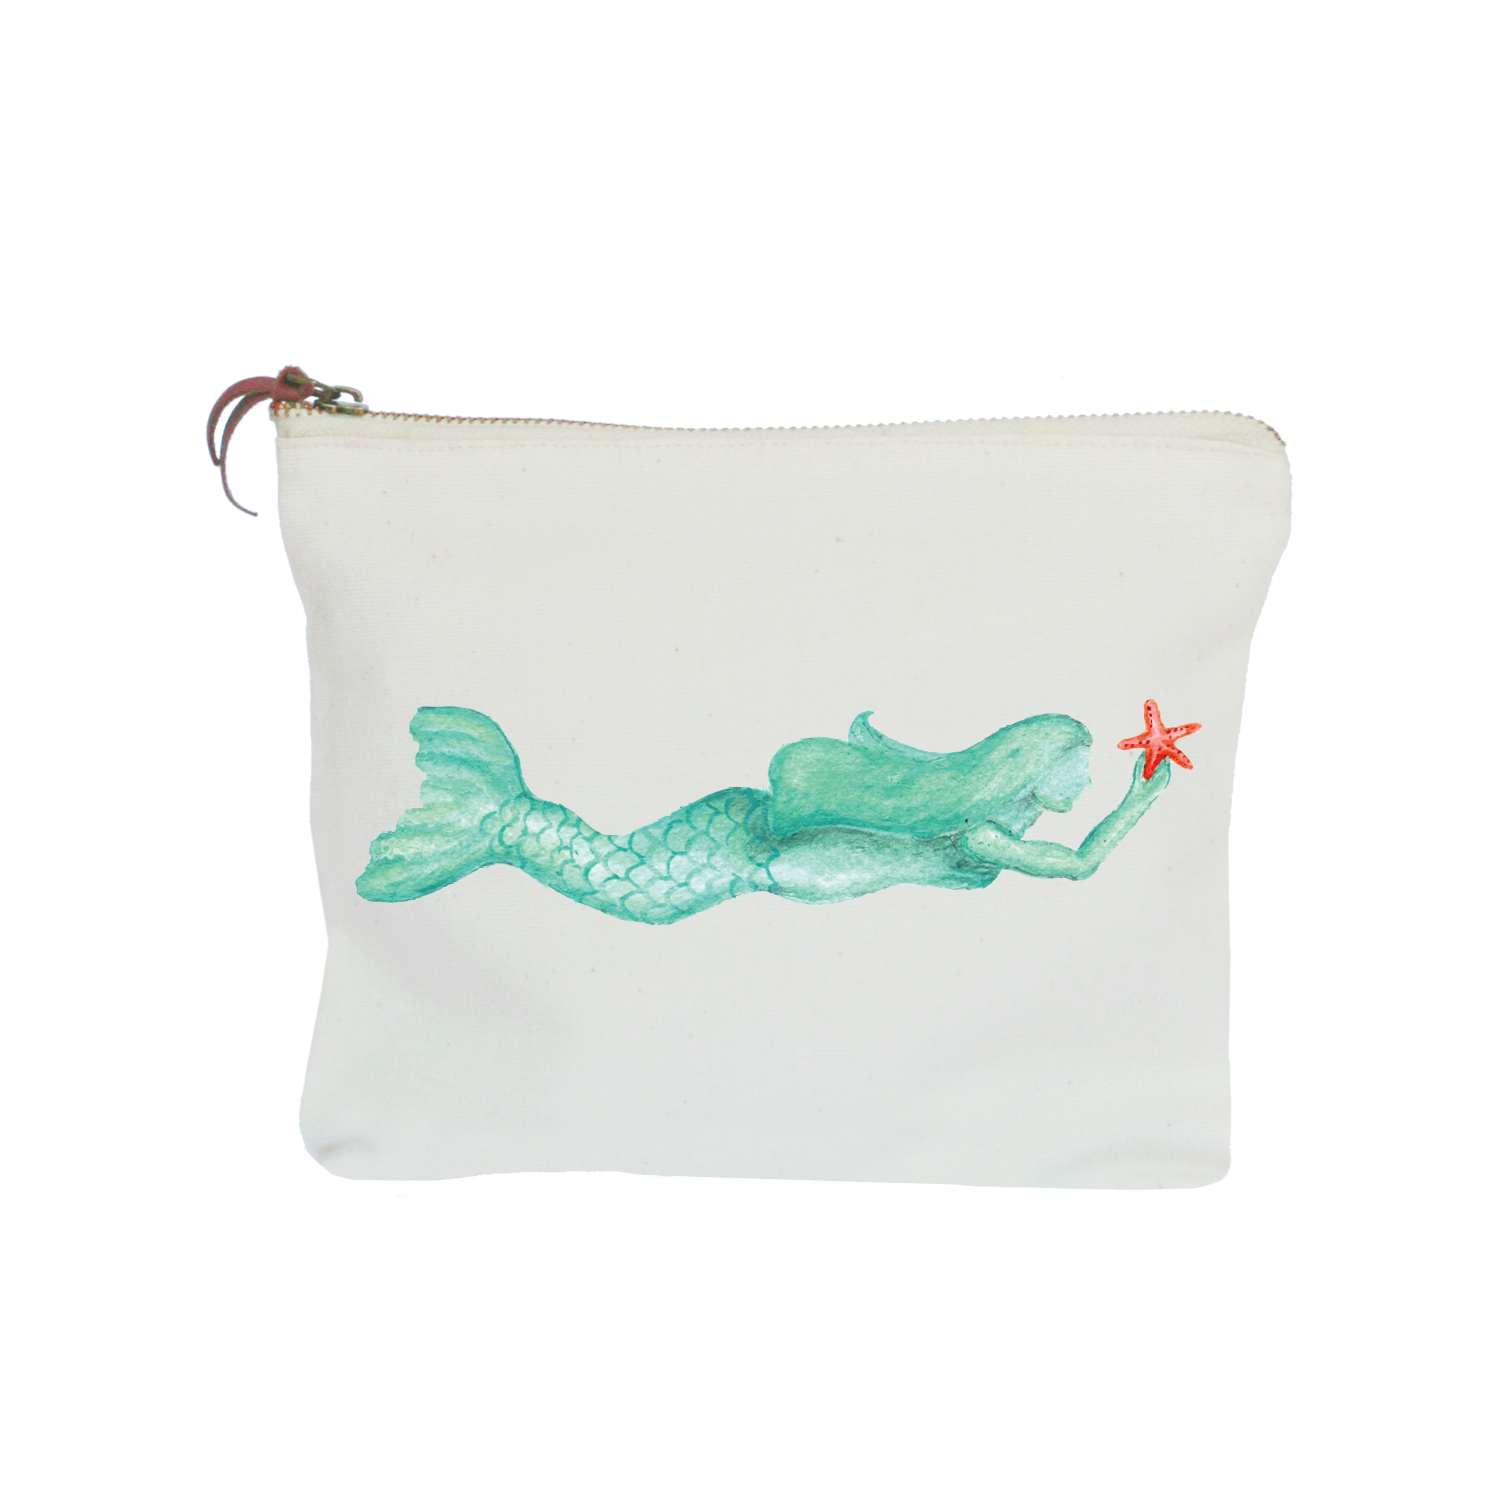 mermaid zipper pouch